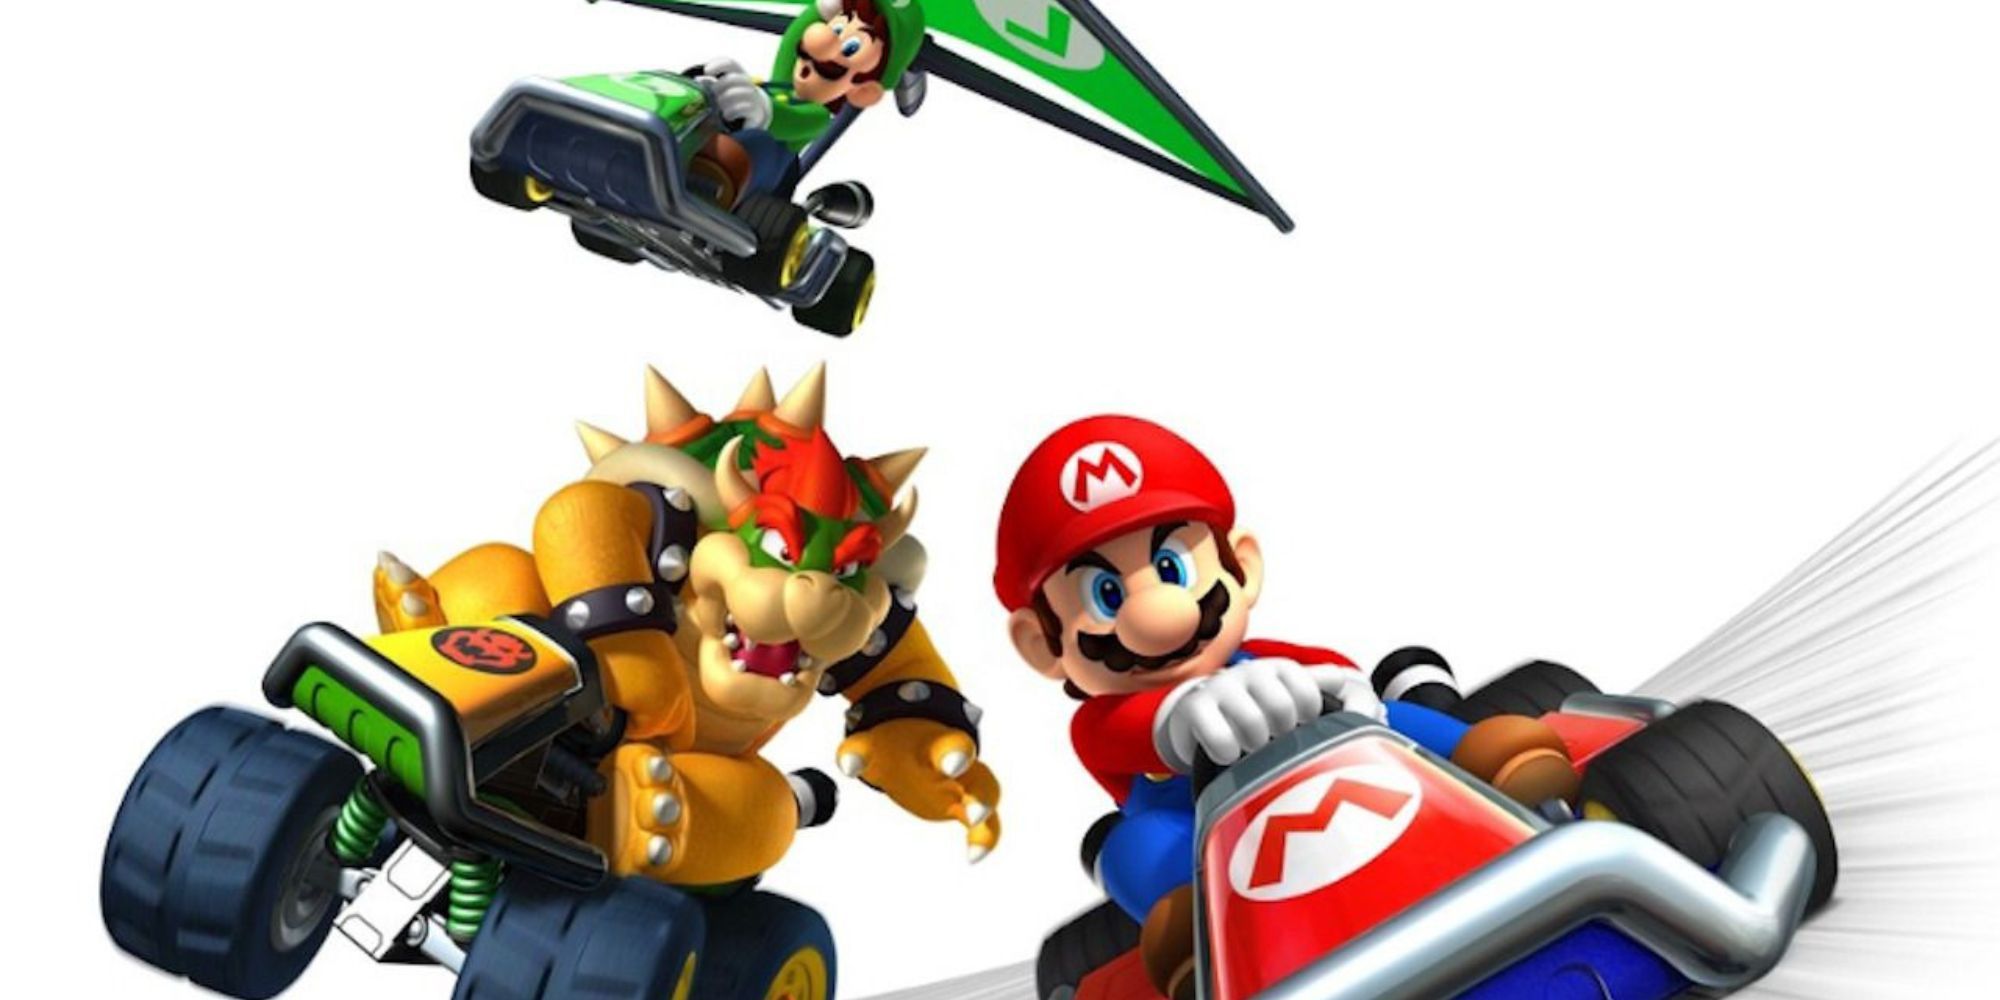 Bowser drives behind Mario while Luigi glides above them